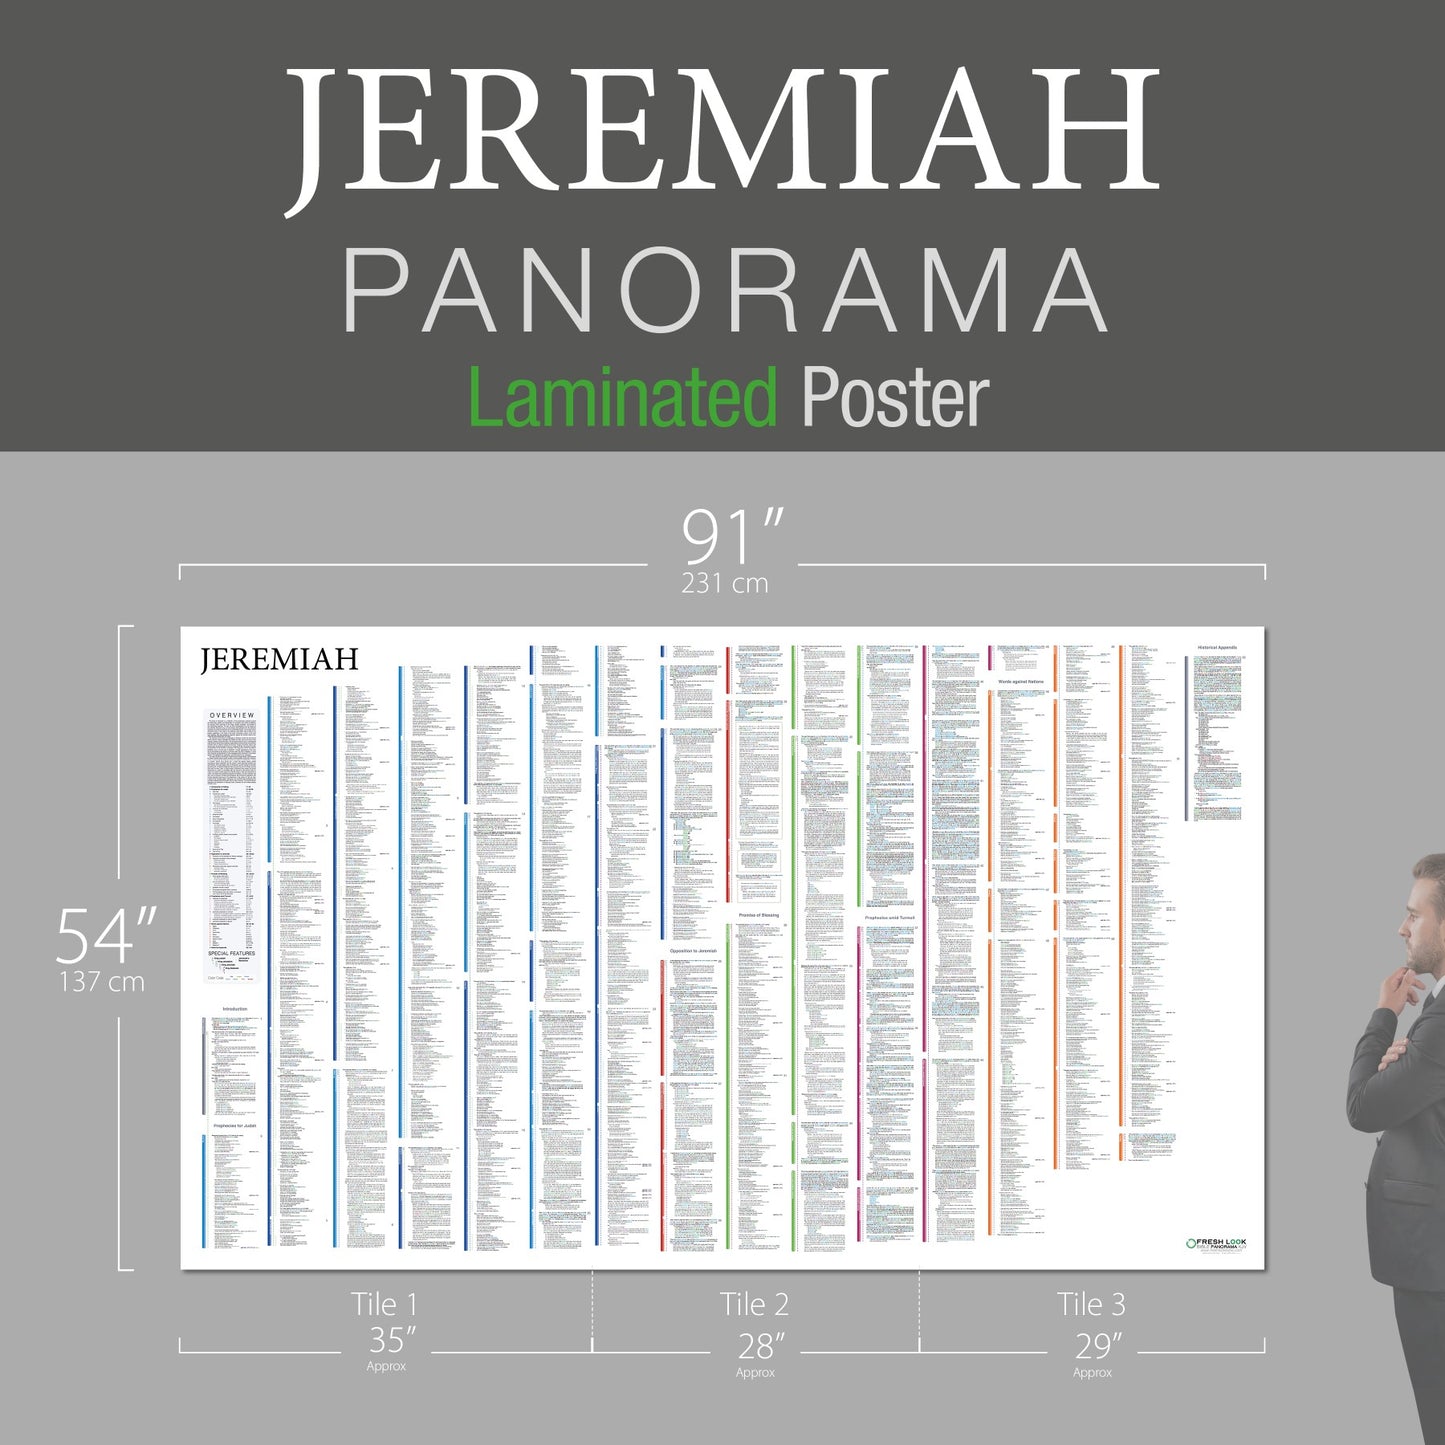 Jeremiah Panorama Laminated